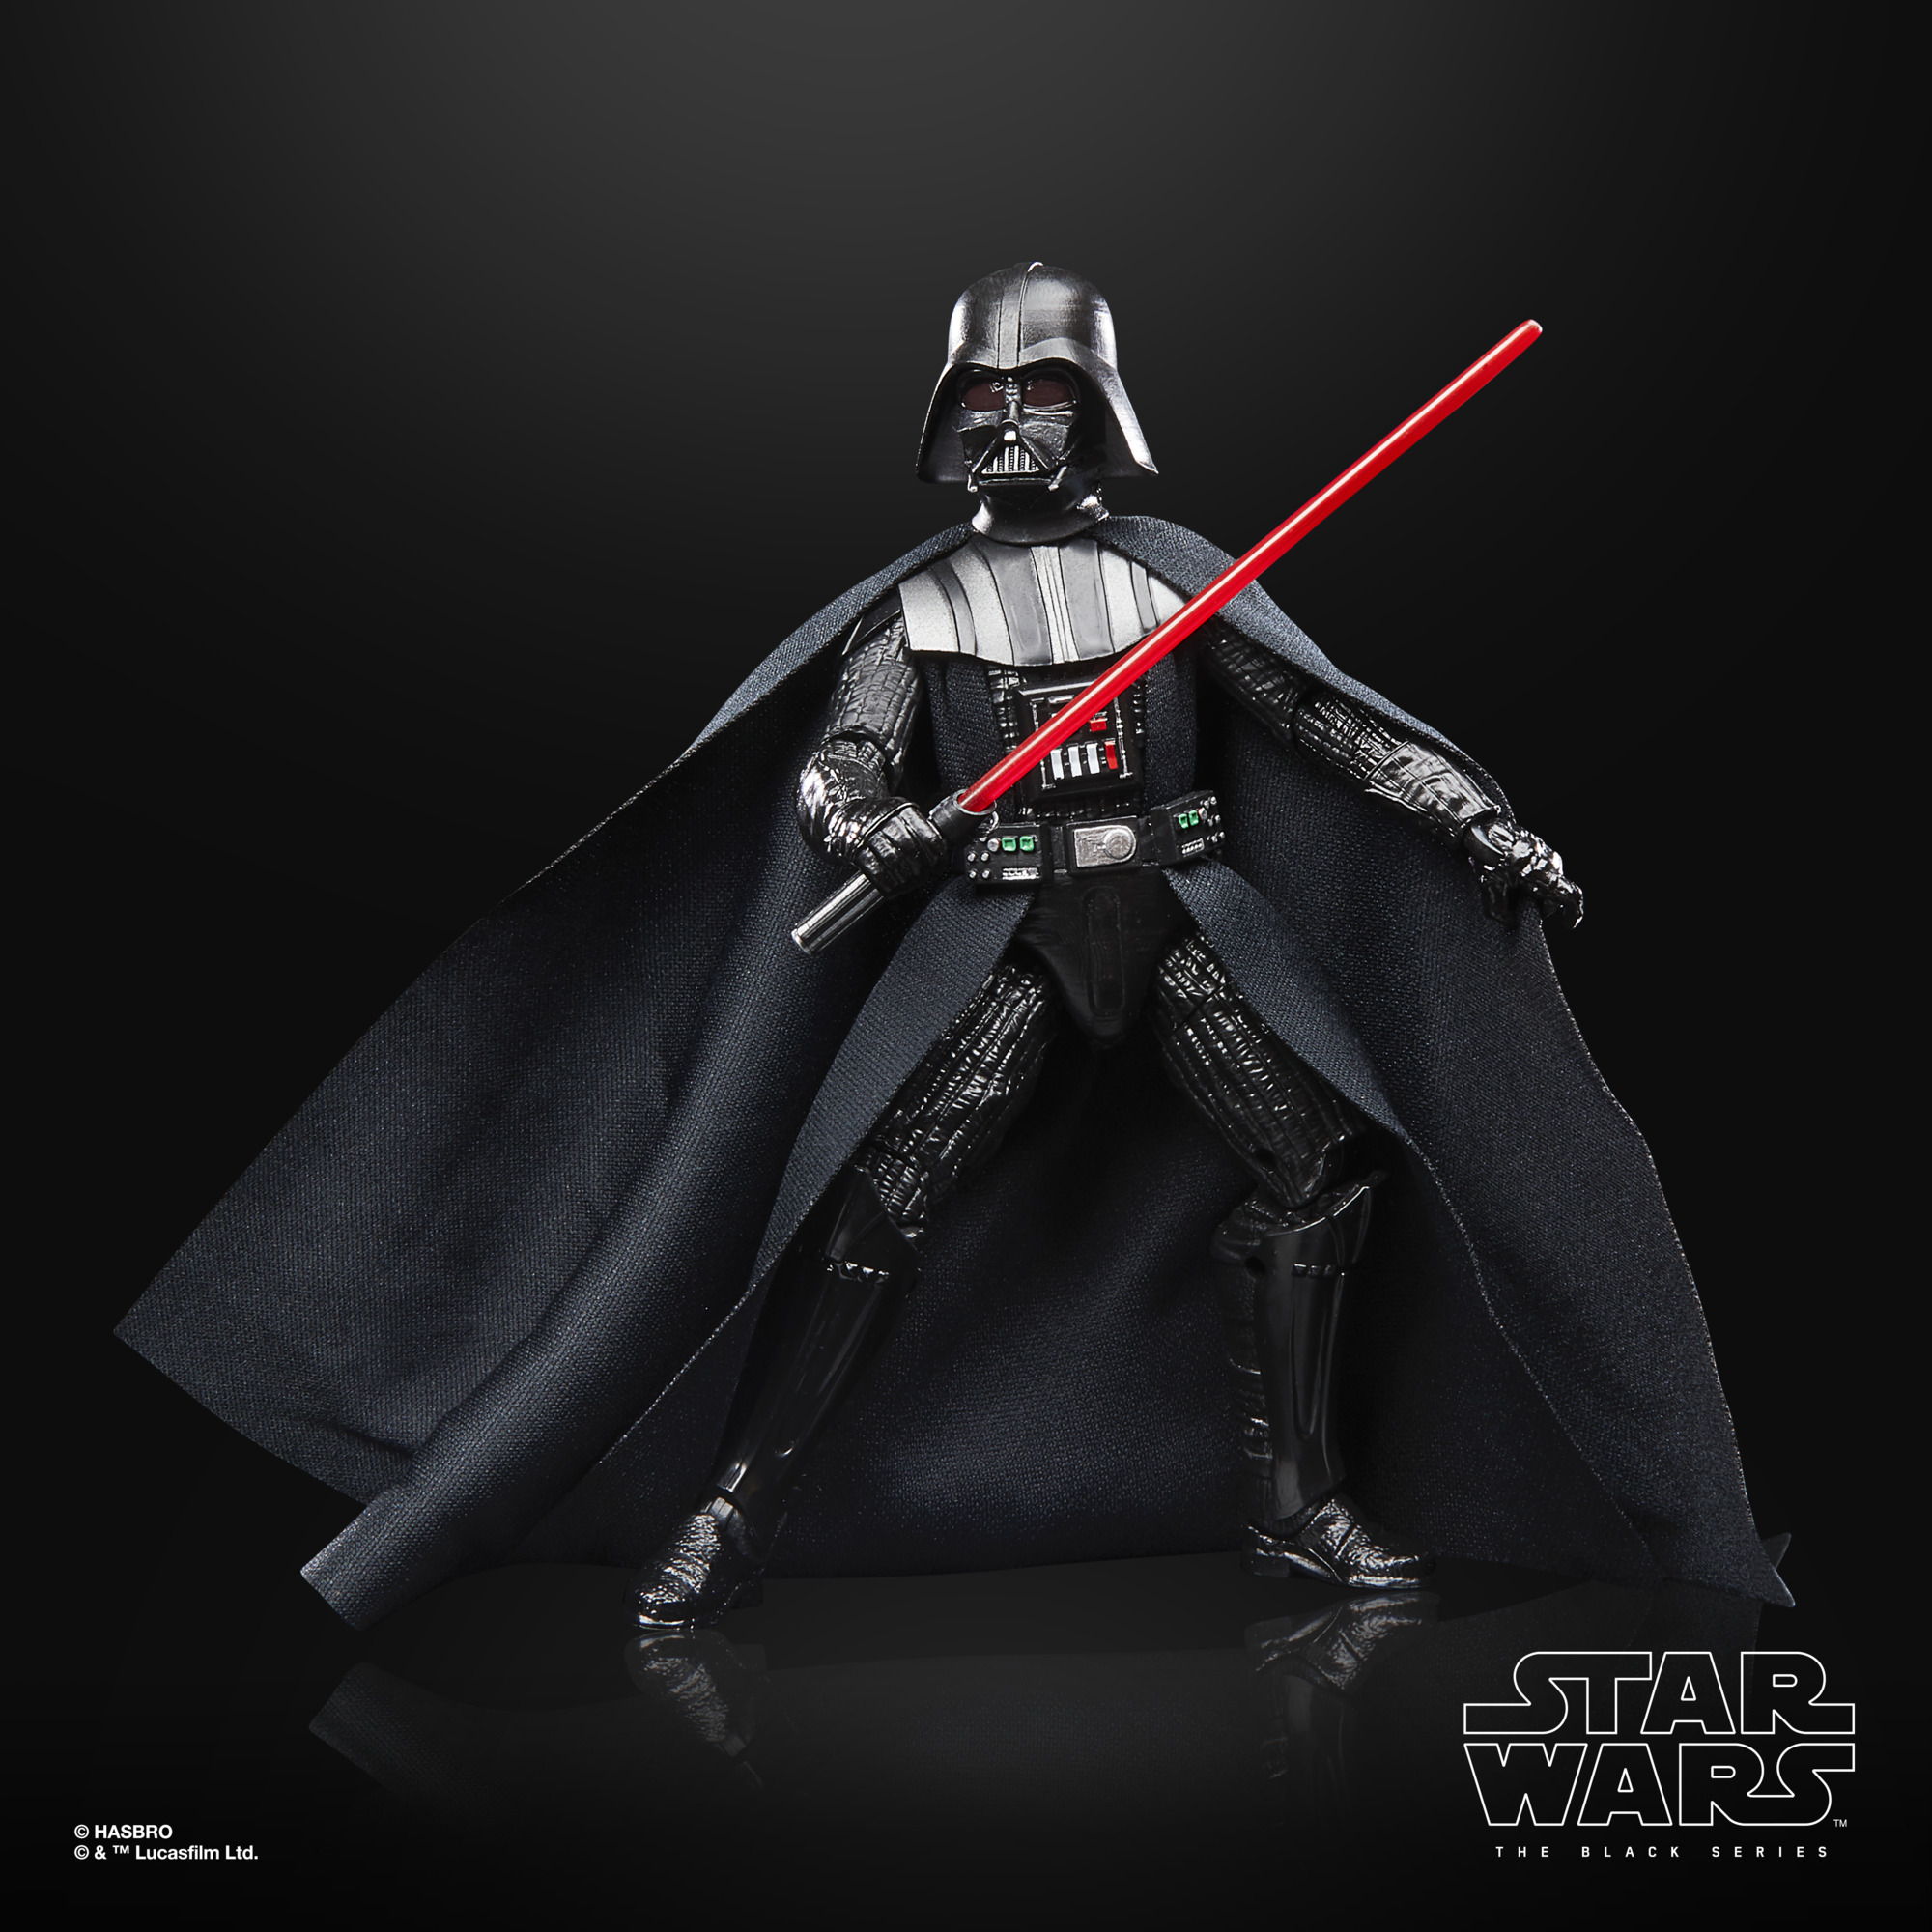  Star Wars The Black Series 40th Anniversary Darth Vader F70825X2 5010996135773